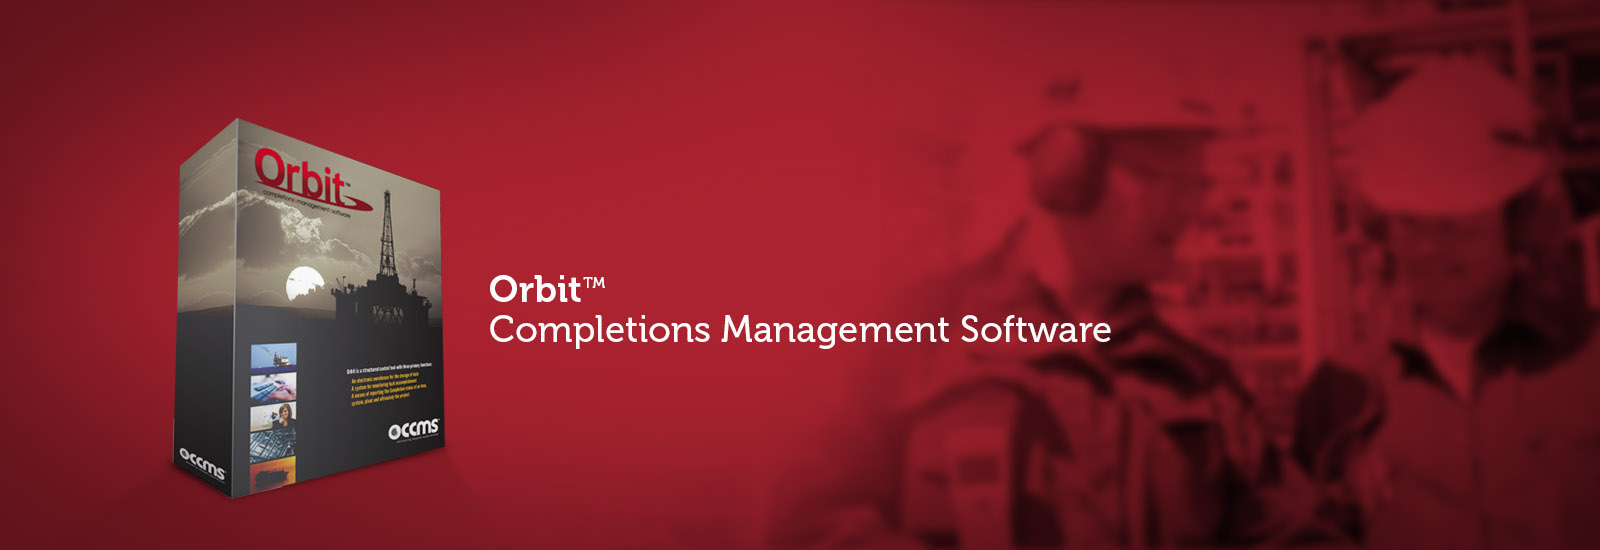 Promotional image for Orbit management software